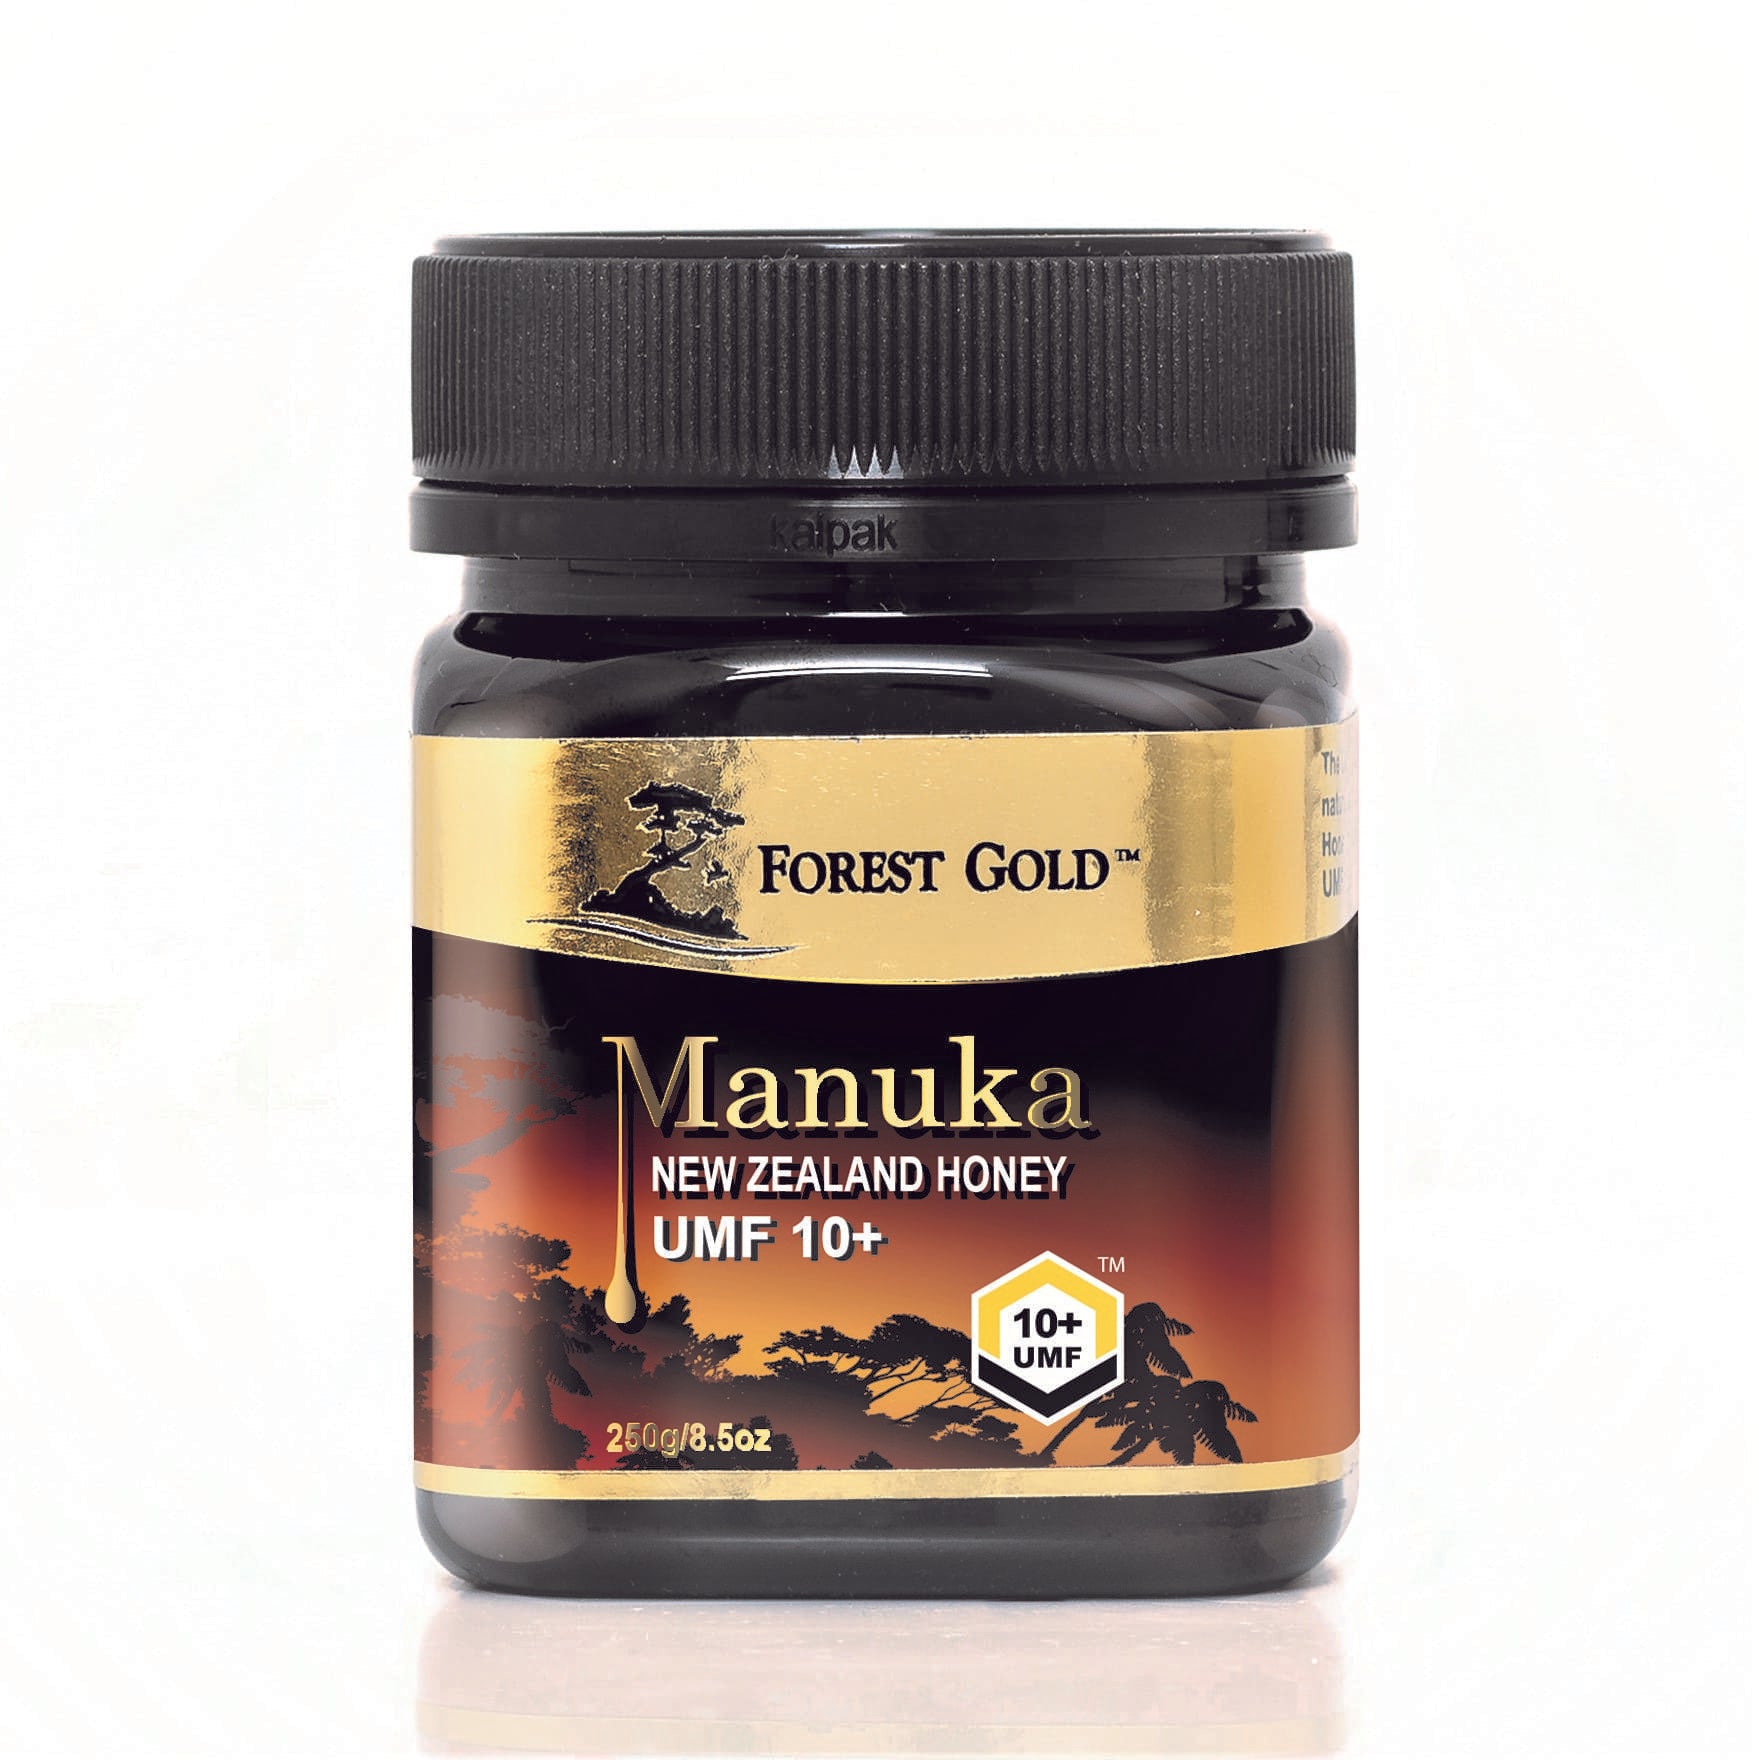 Forest Gold Manuka UMF 10+ Certified NZ Honey- 250g Manuka Honey Organichub   